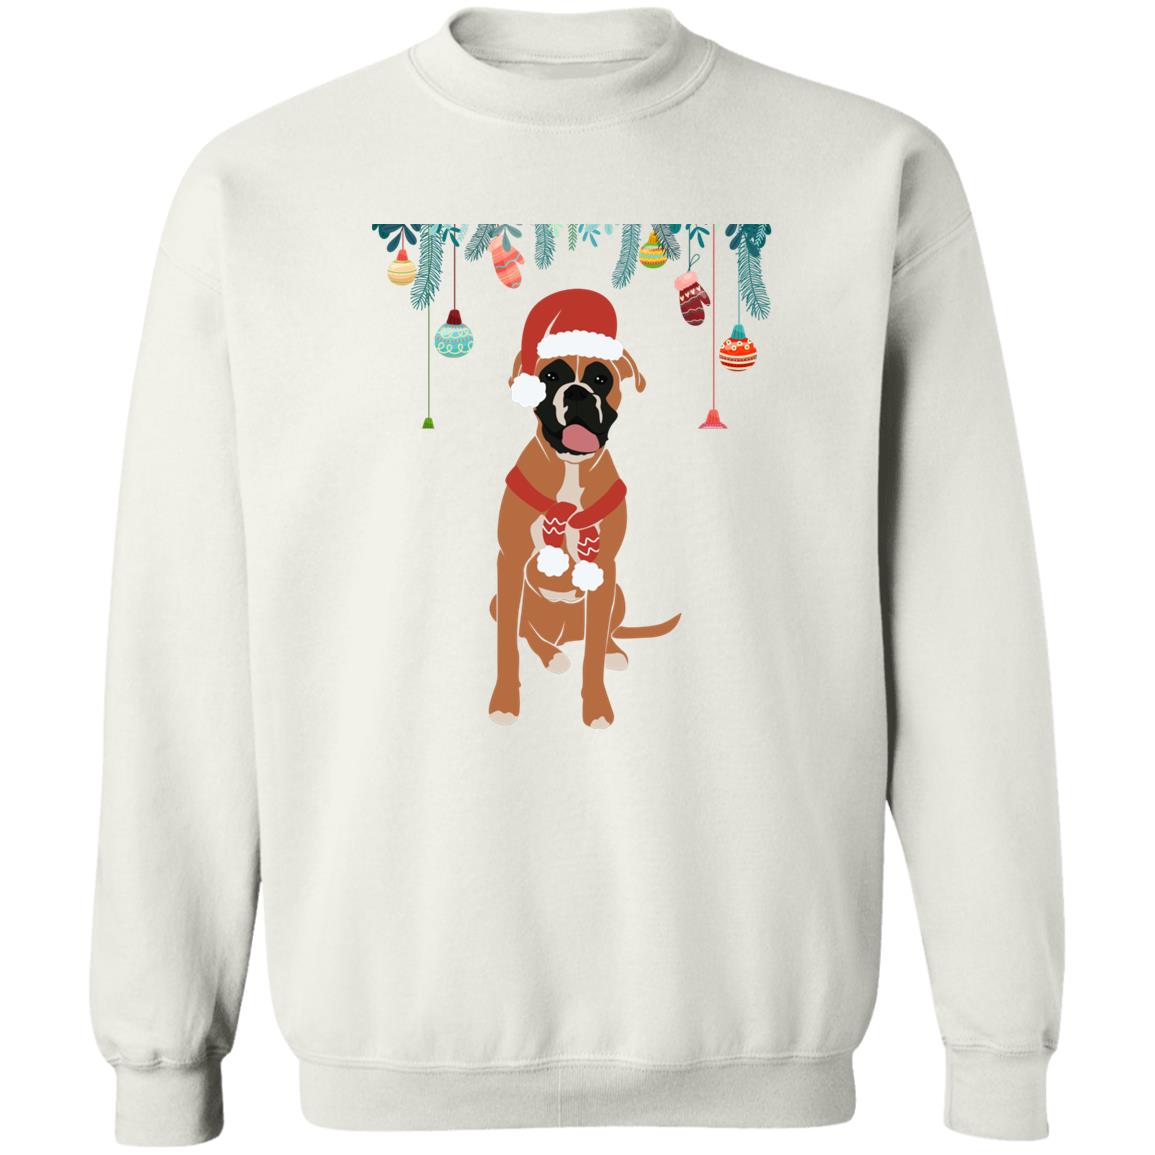 It's a Dog on Christmas - G180 Crewneck Pullover Sweatshirt